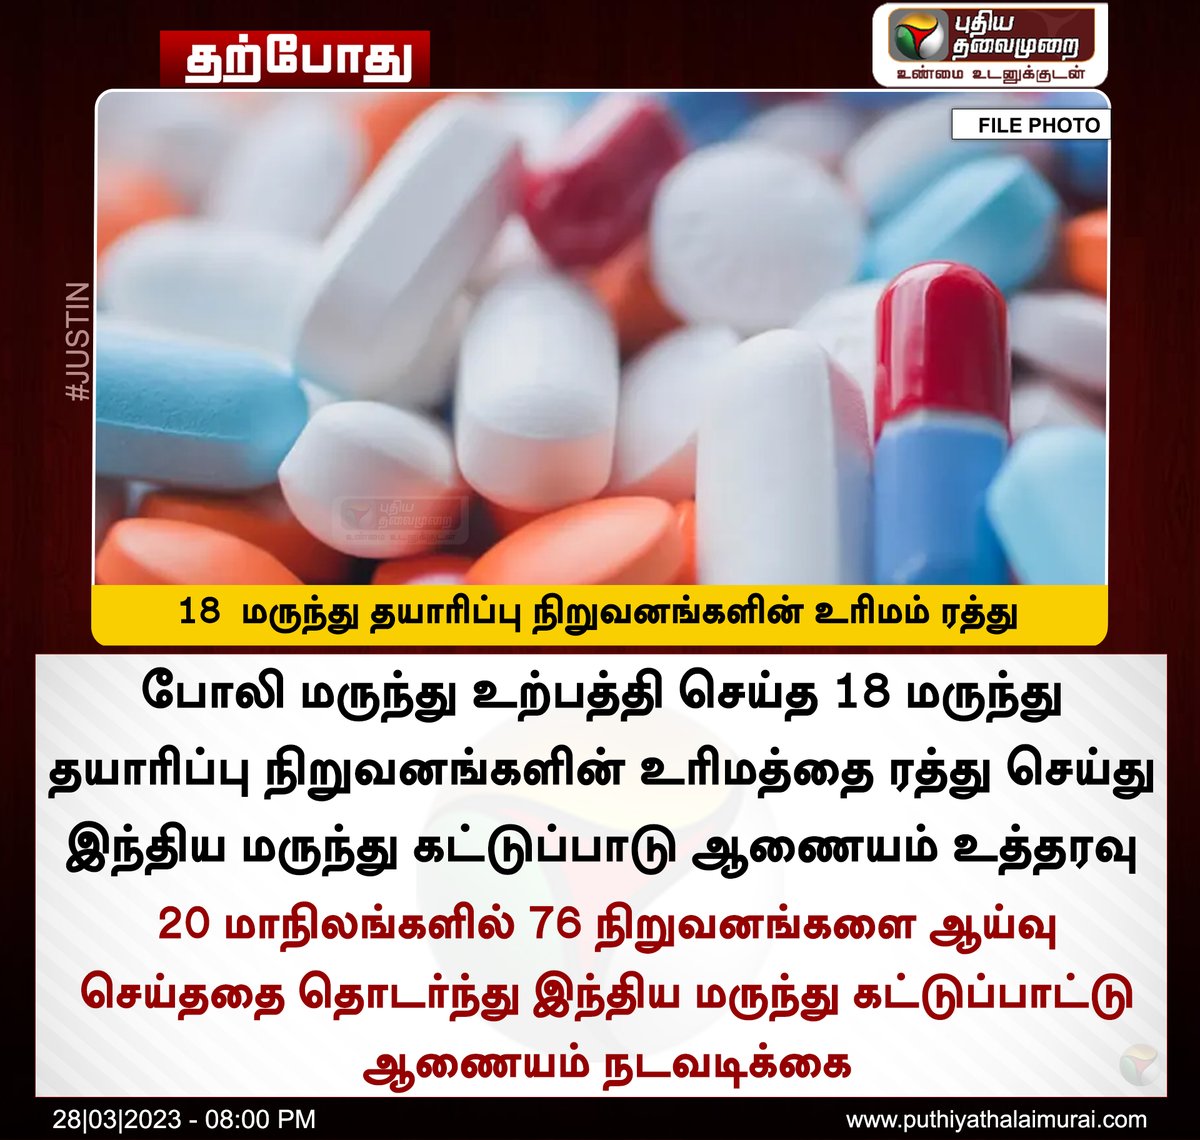 #JUSTIN | 18 மருந்து தயாரிப்பு நிறுவனங்களின் உரிமம் ரத்து

#PharmaCompanies | #Spuriousmedicines | #DCGI | #Drugs